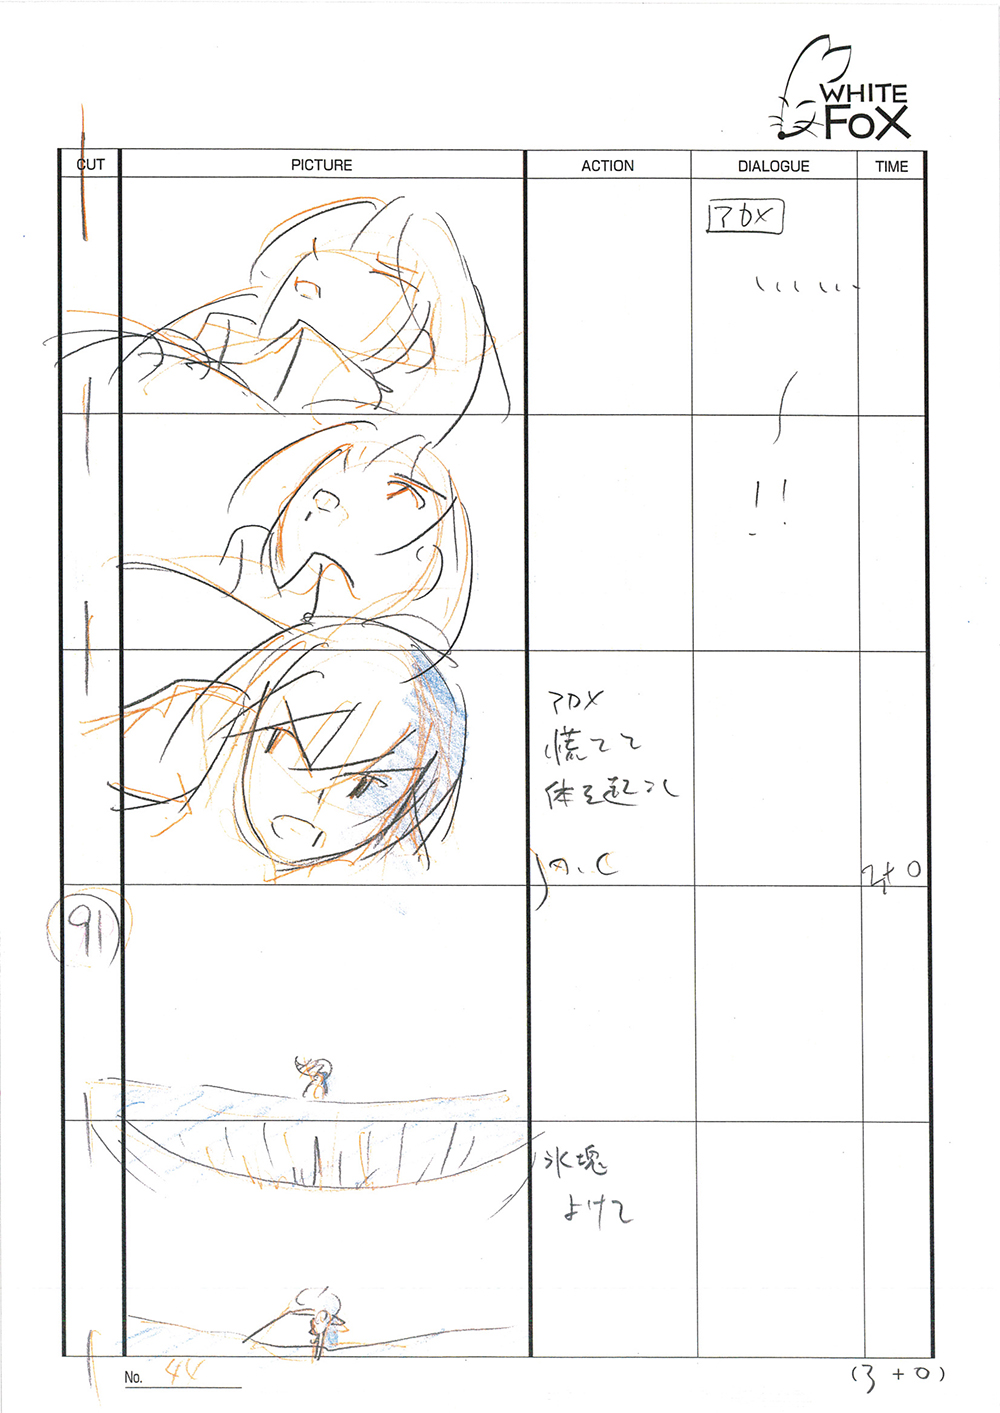 Akame ga Kill Episode 24 Storyboard Leak 046